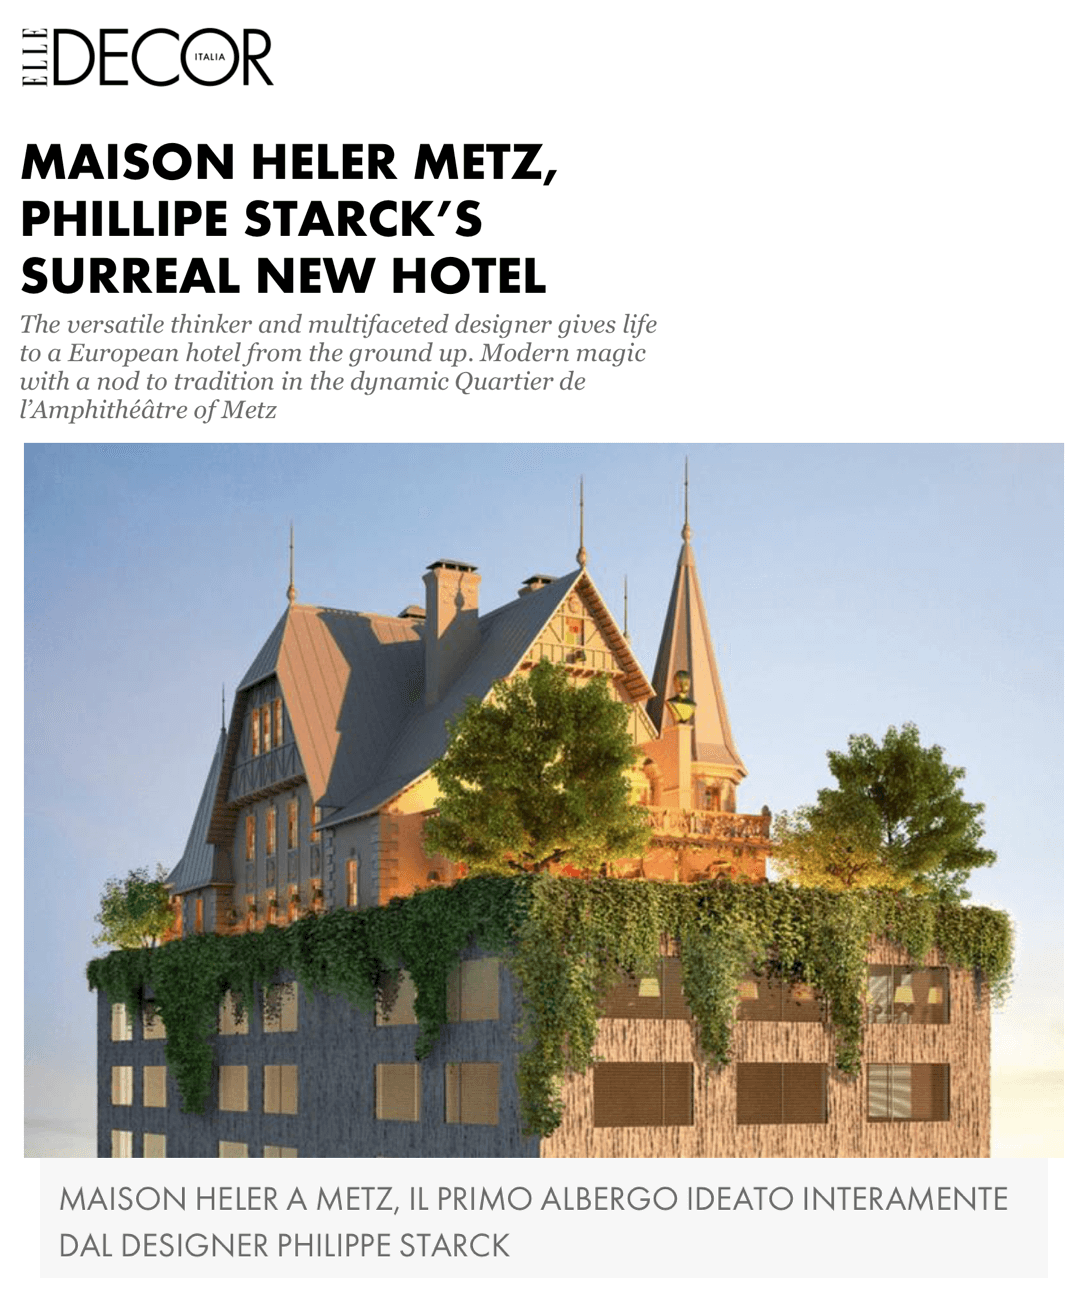 Maison Heler Metz, Philippe Starck's surreal new hotel